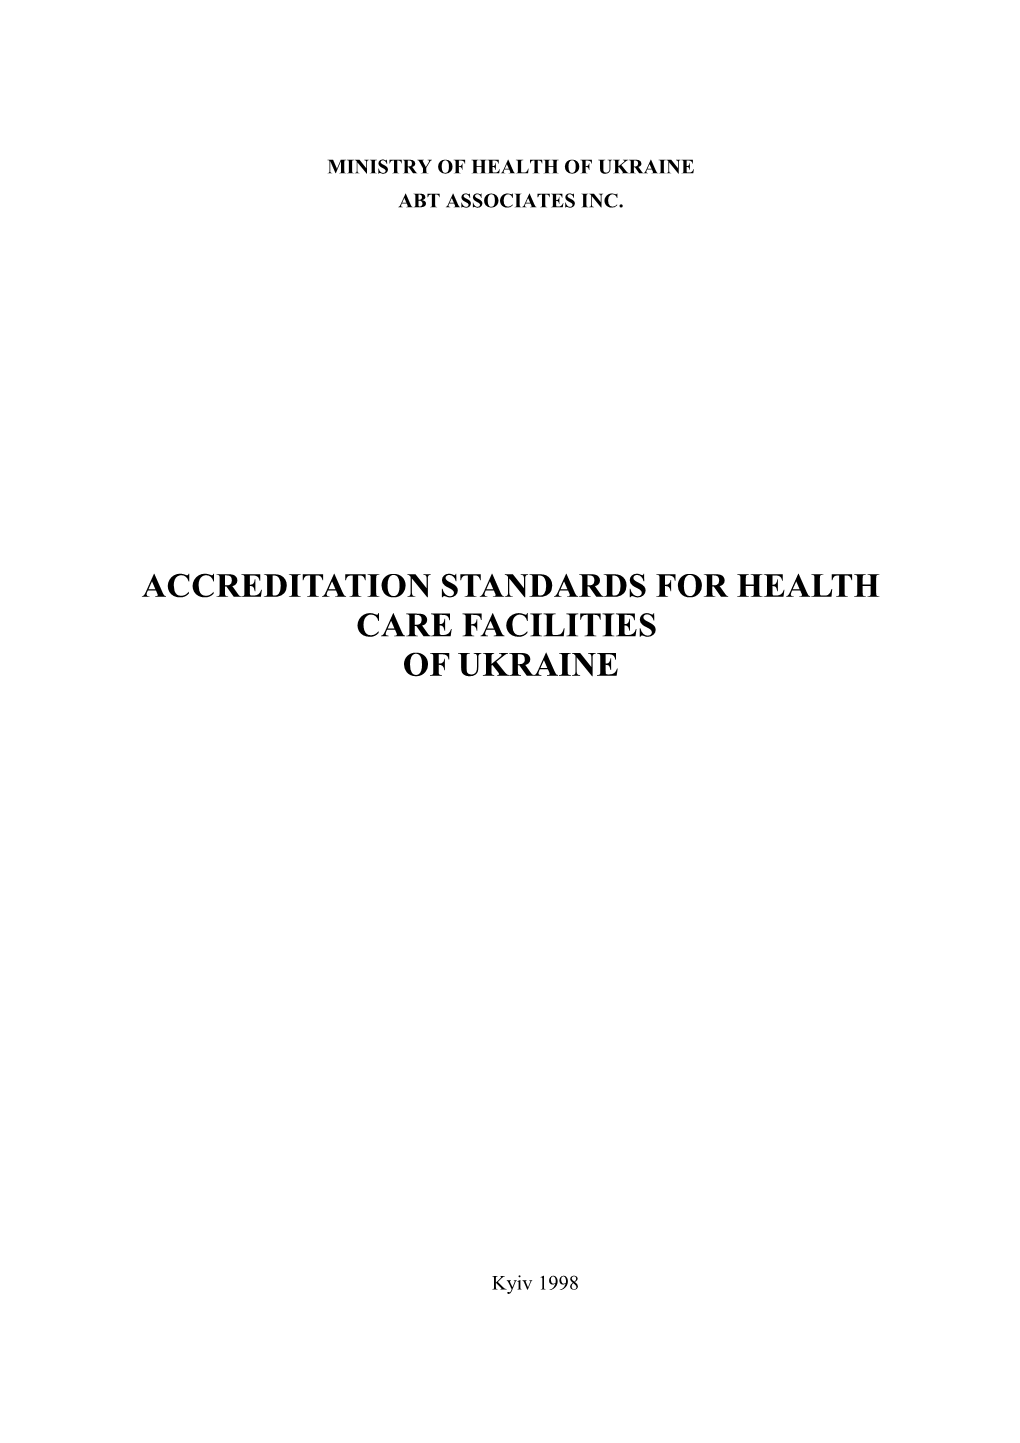 Accreditation Standards for Health Facilities in Ukraine KYIV 1998